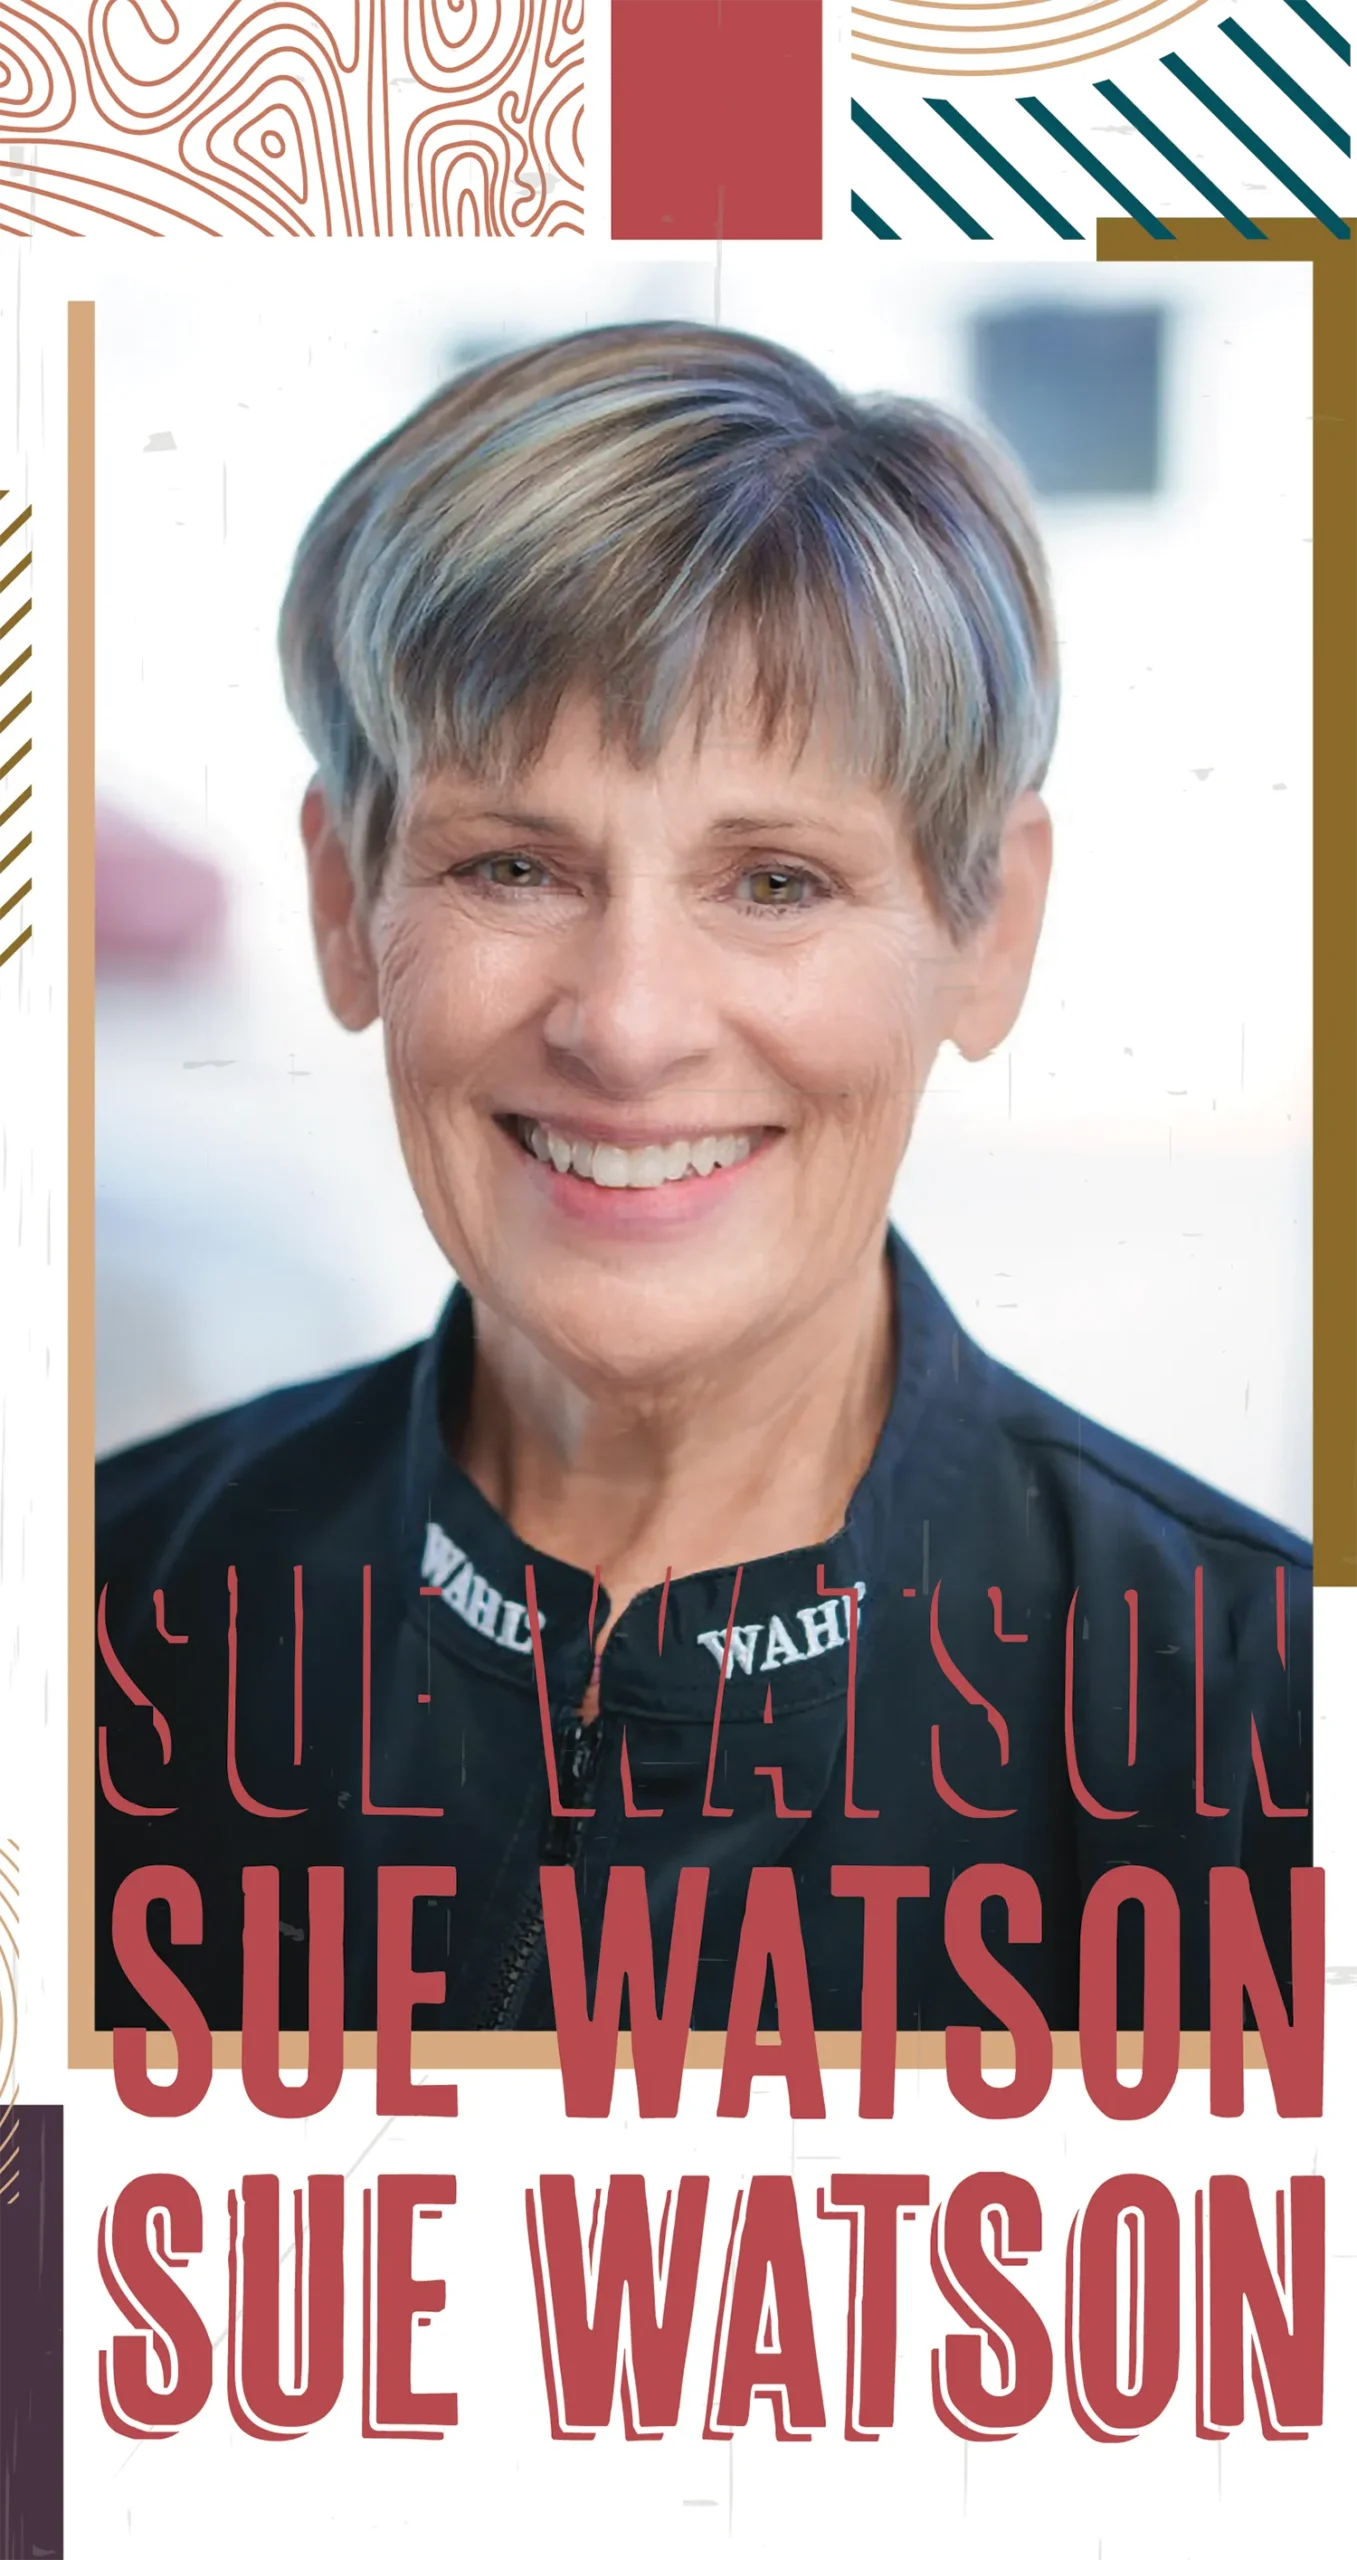 Sue Watson headshot and typographic title